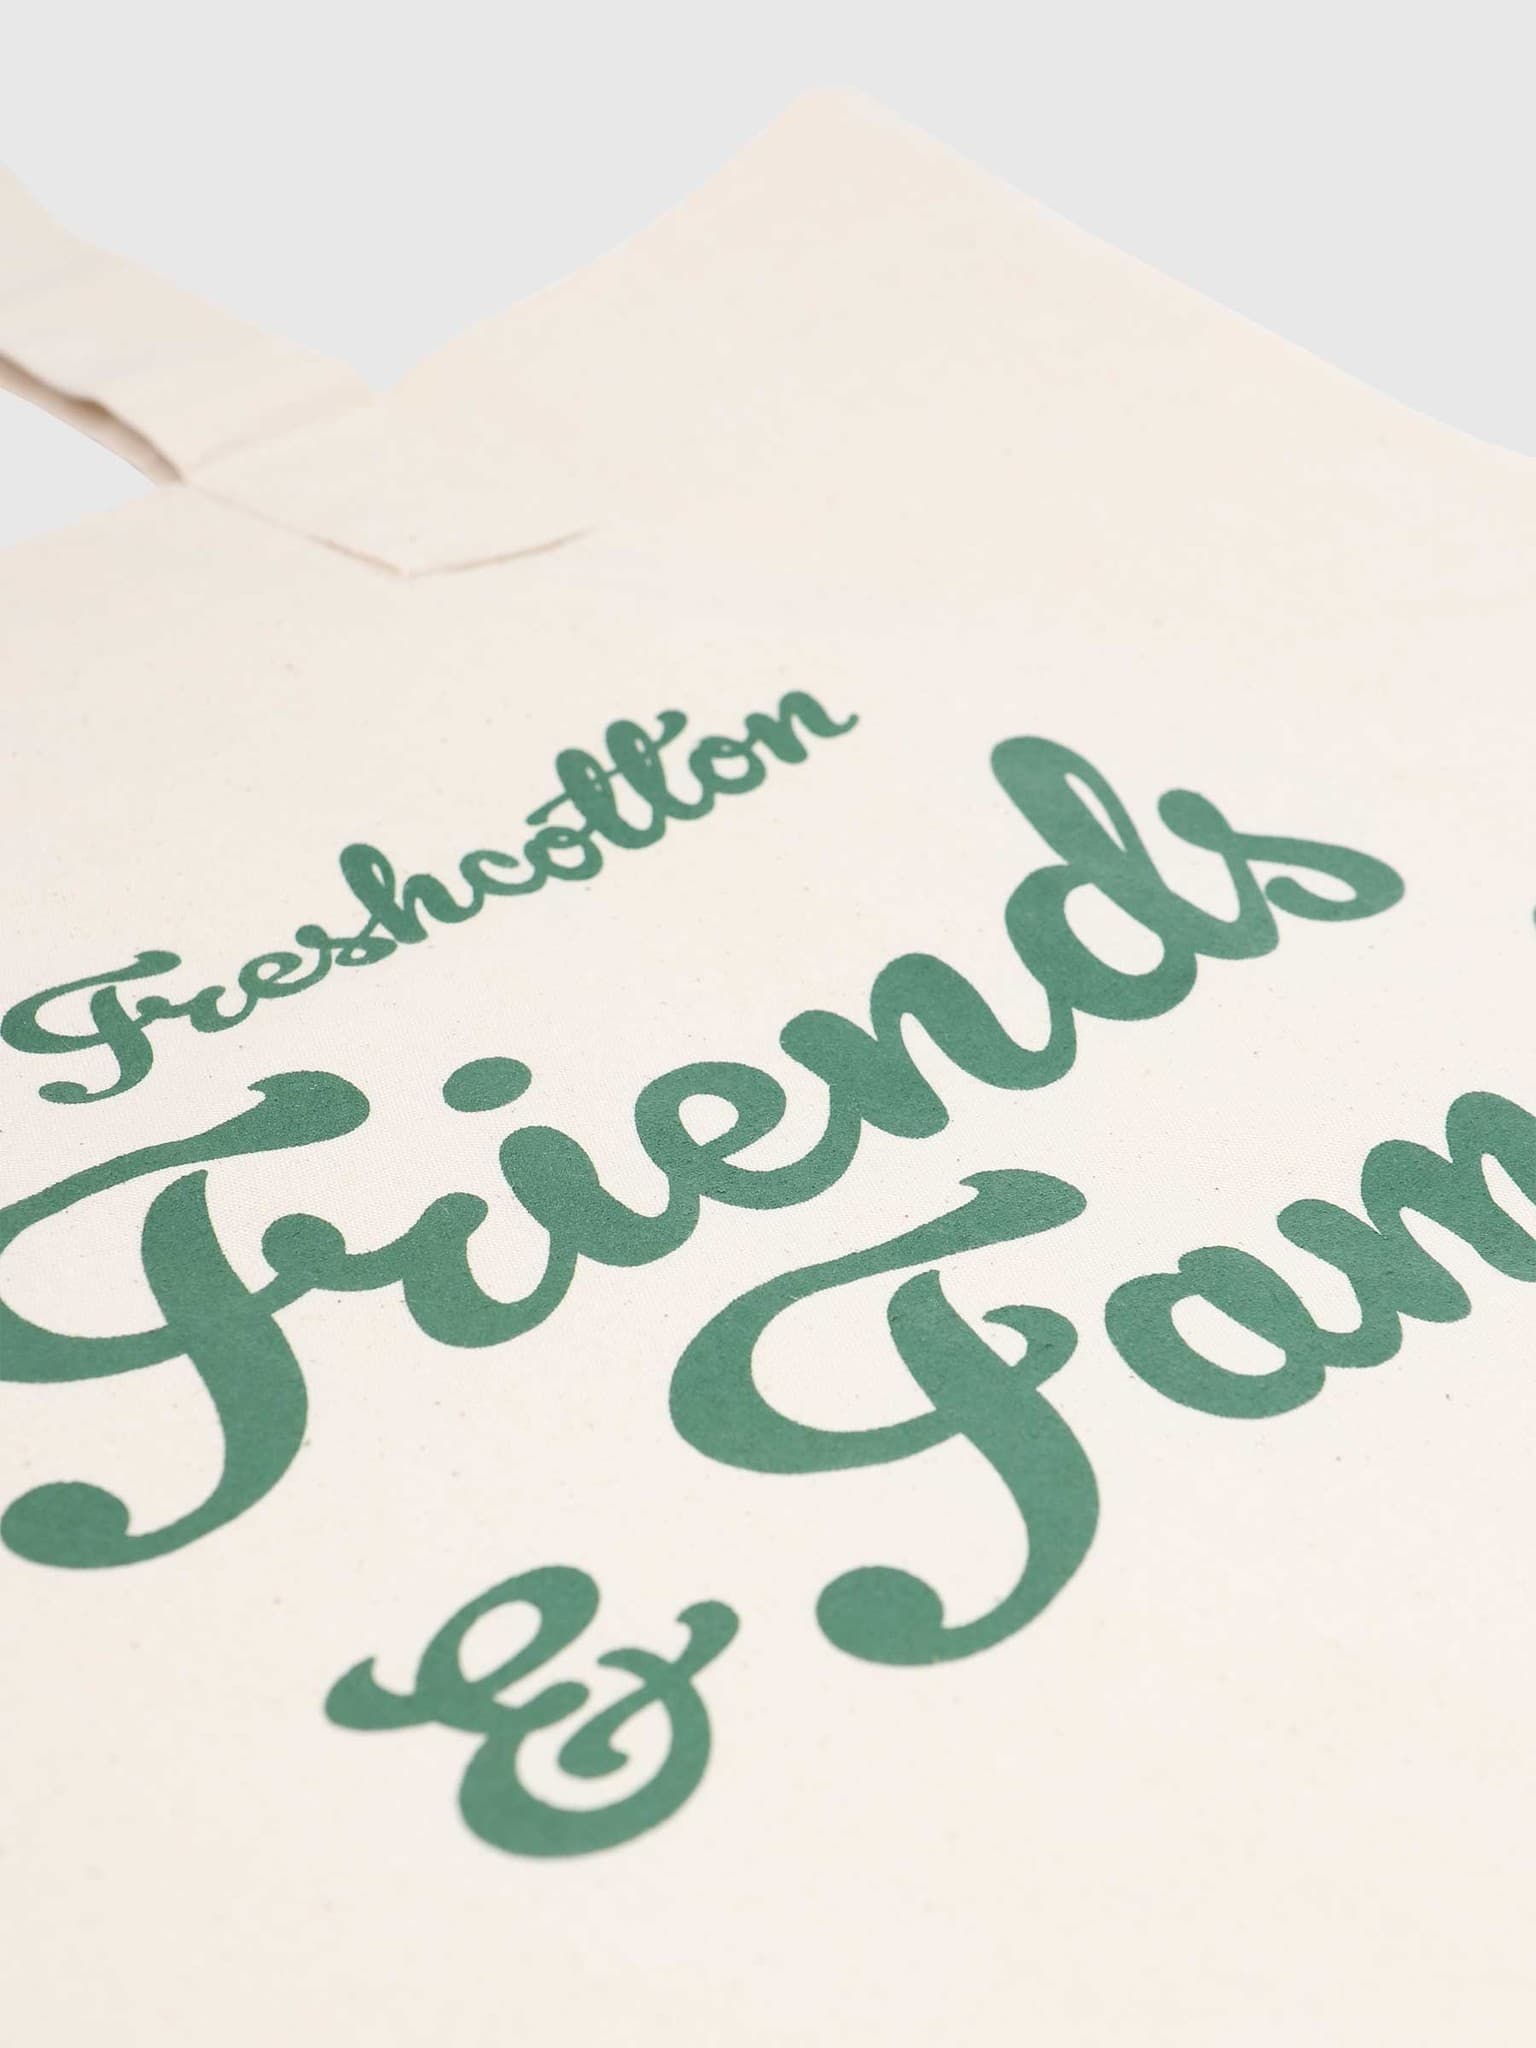 Freshcotton Friends & Family Tote Bag Natural